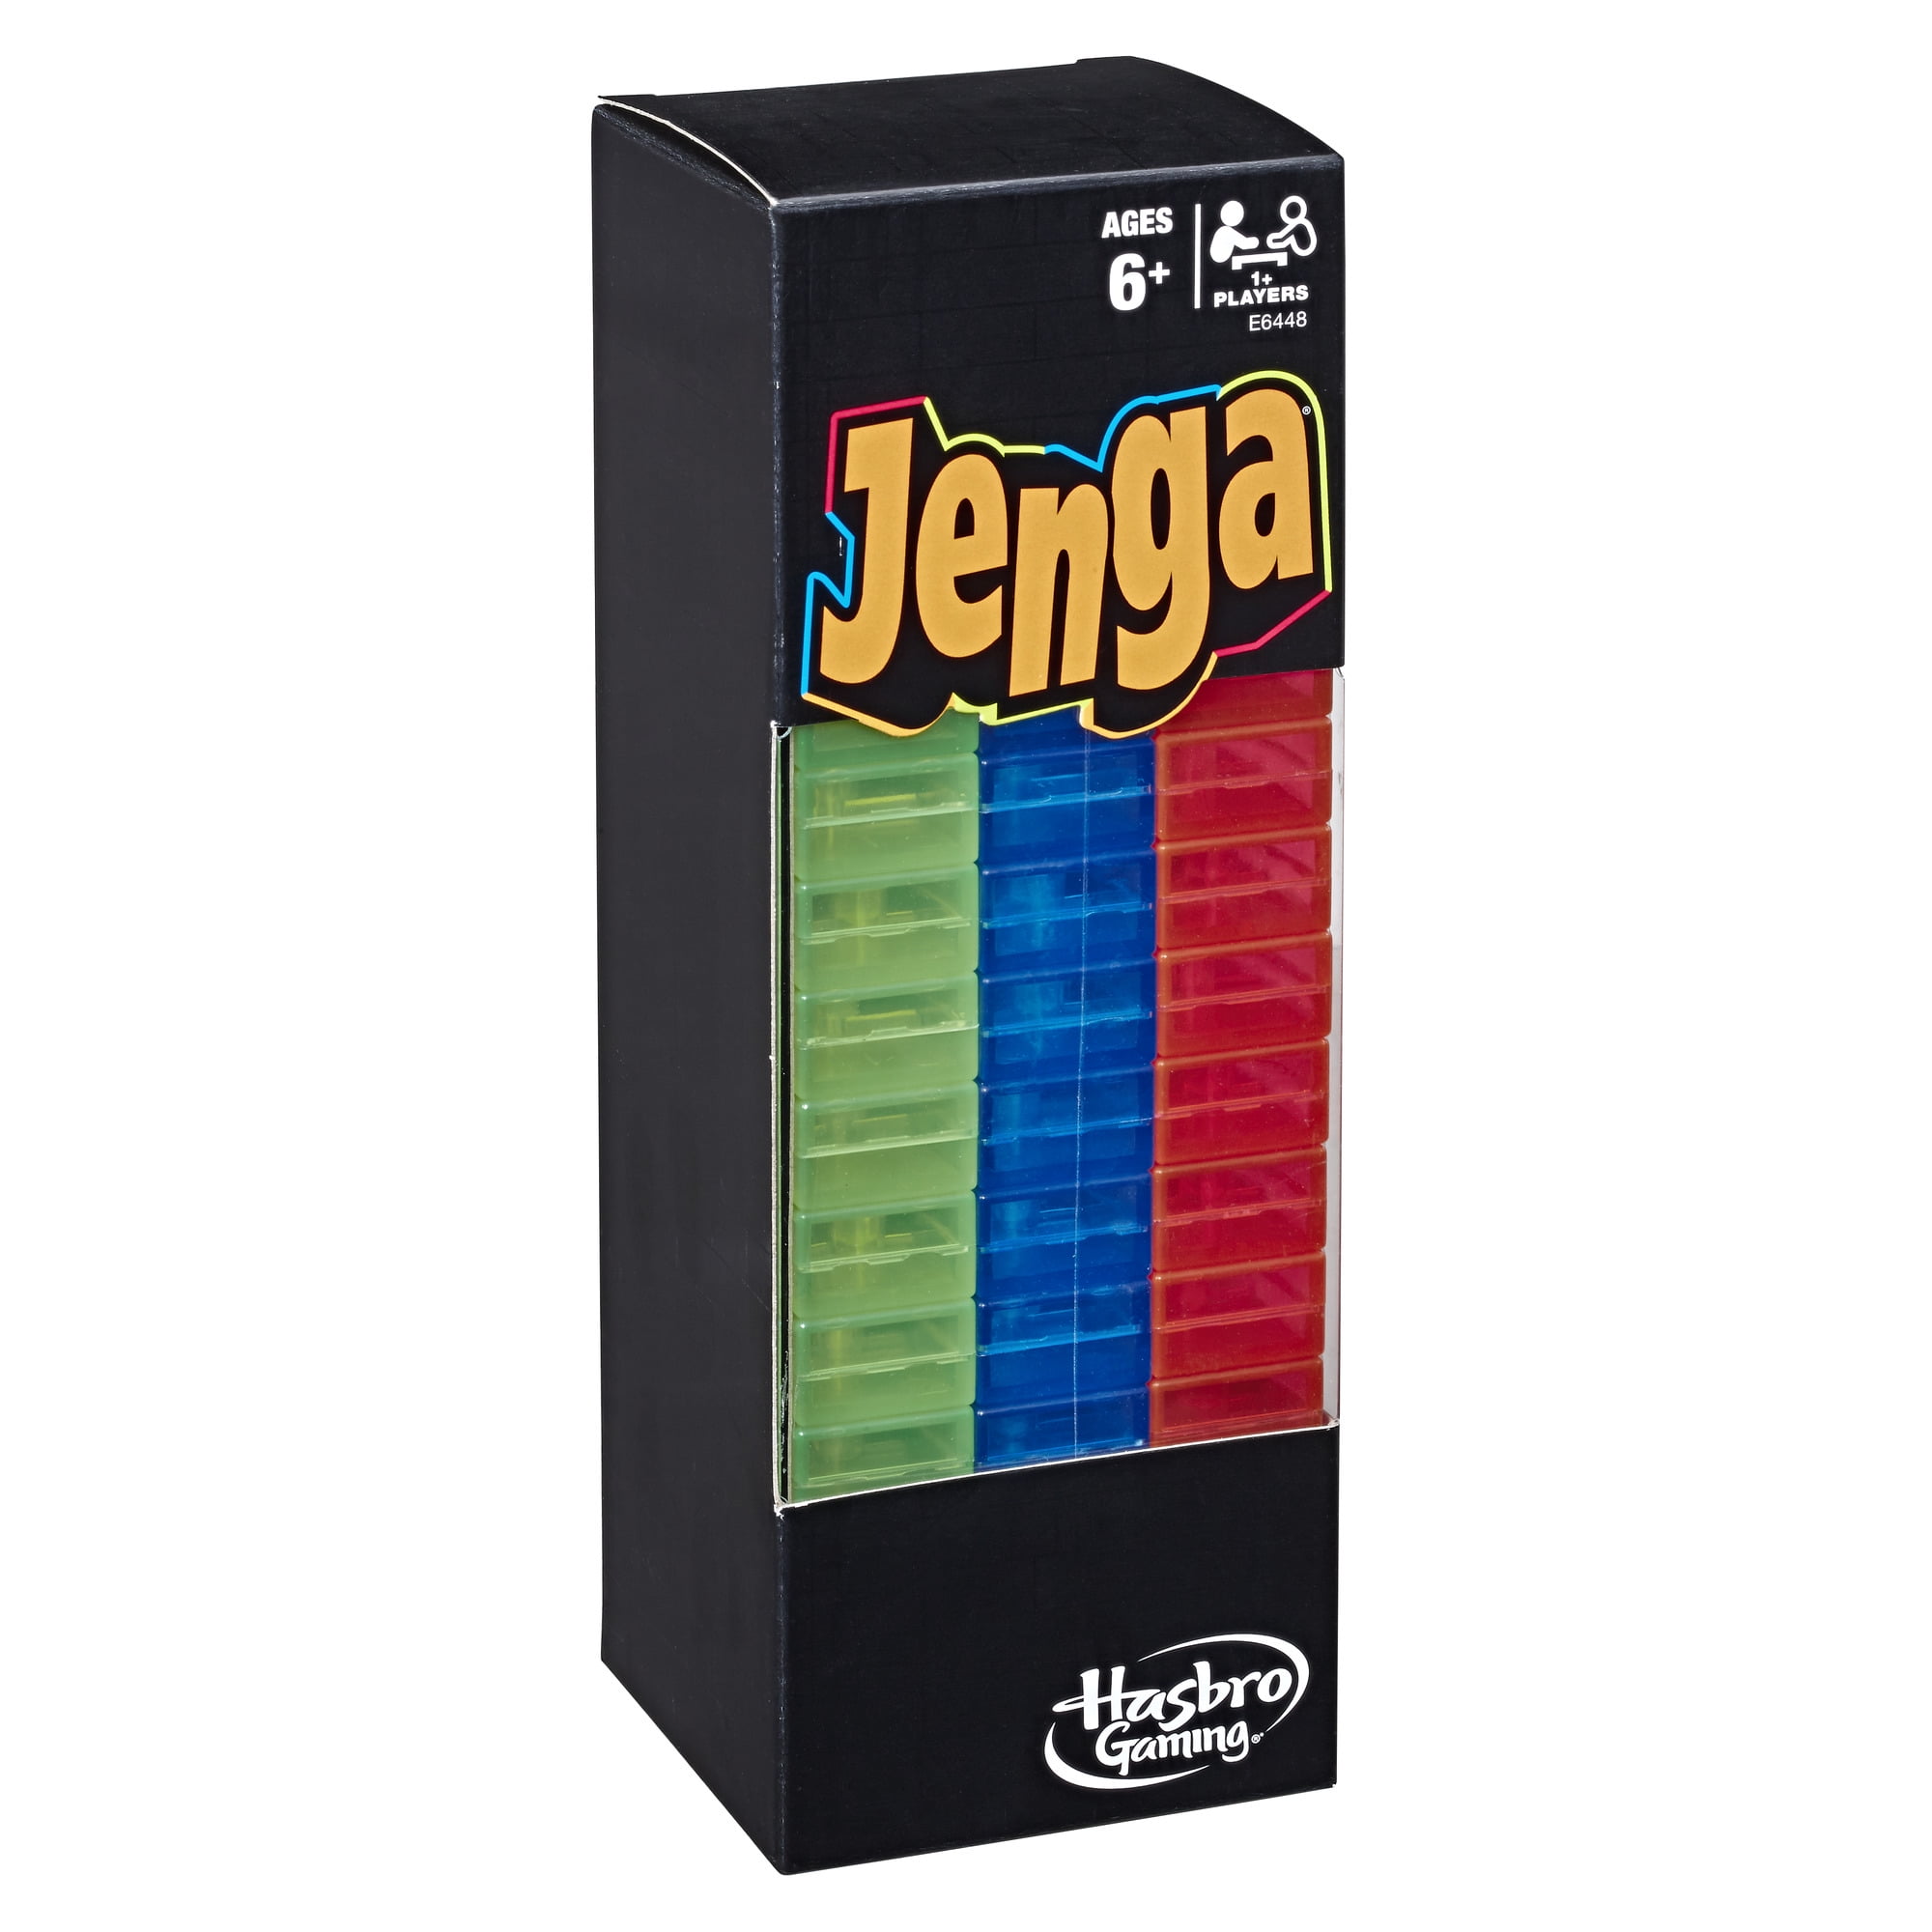 10 JENGA GAME BLOCKS REPLACEMENT PARTS 10 BLOCKS 